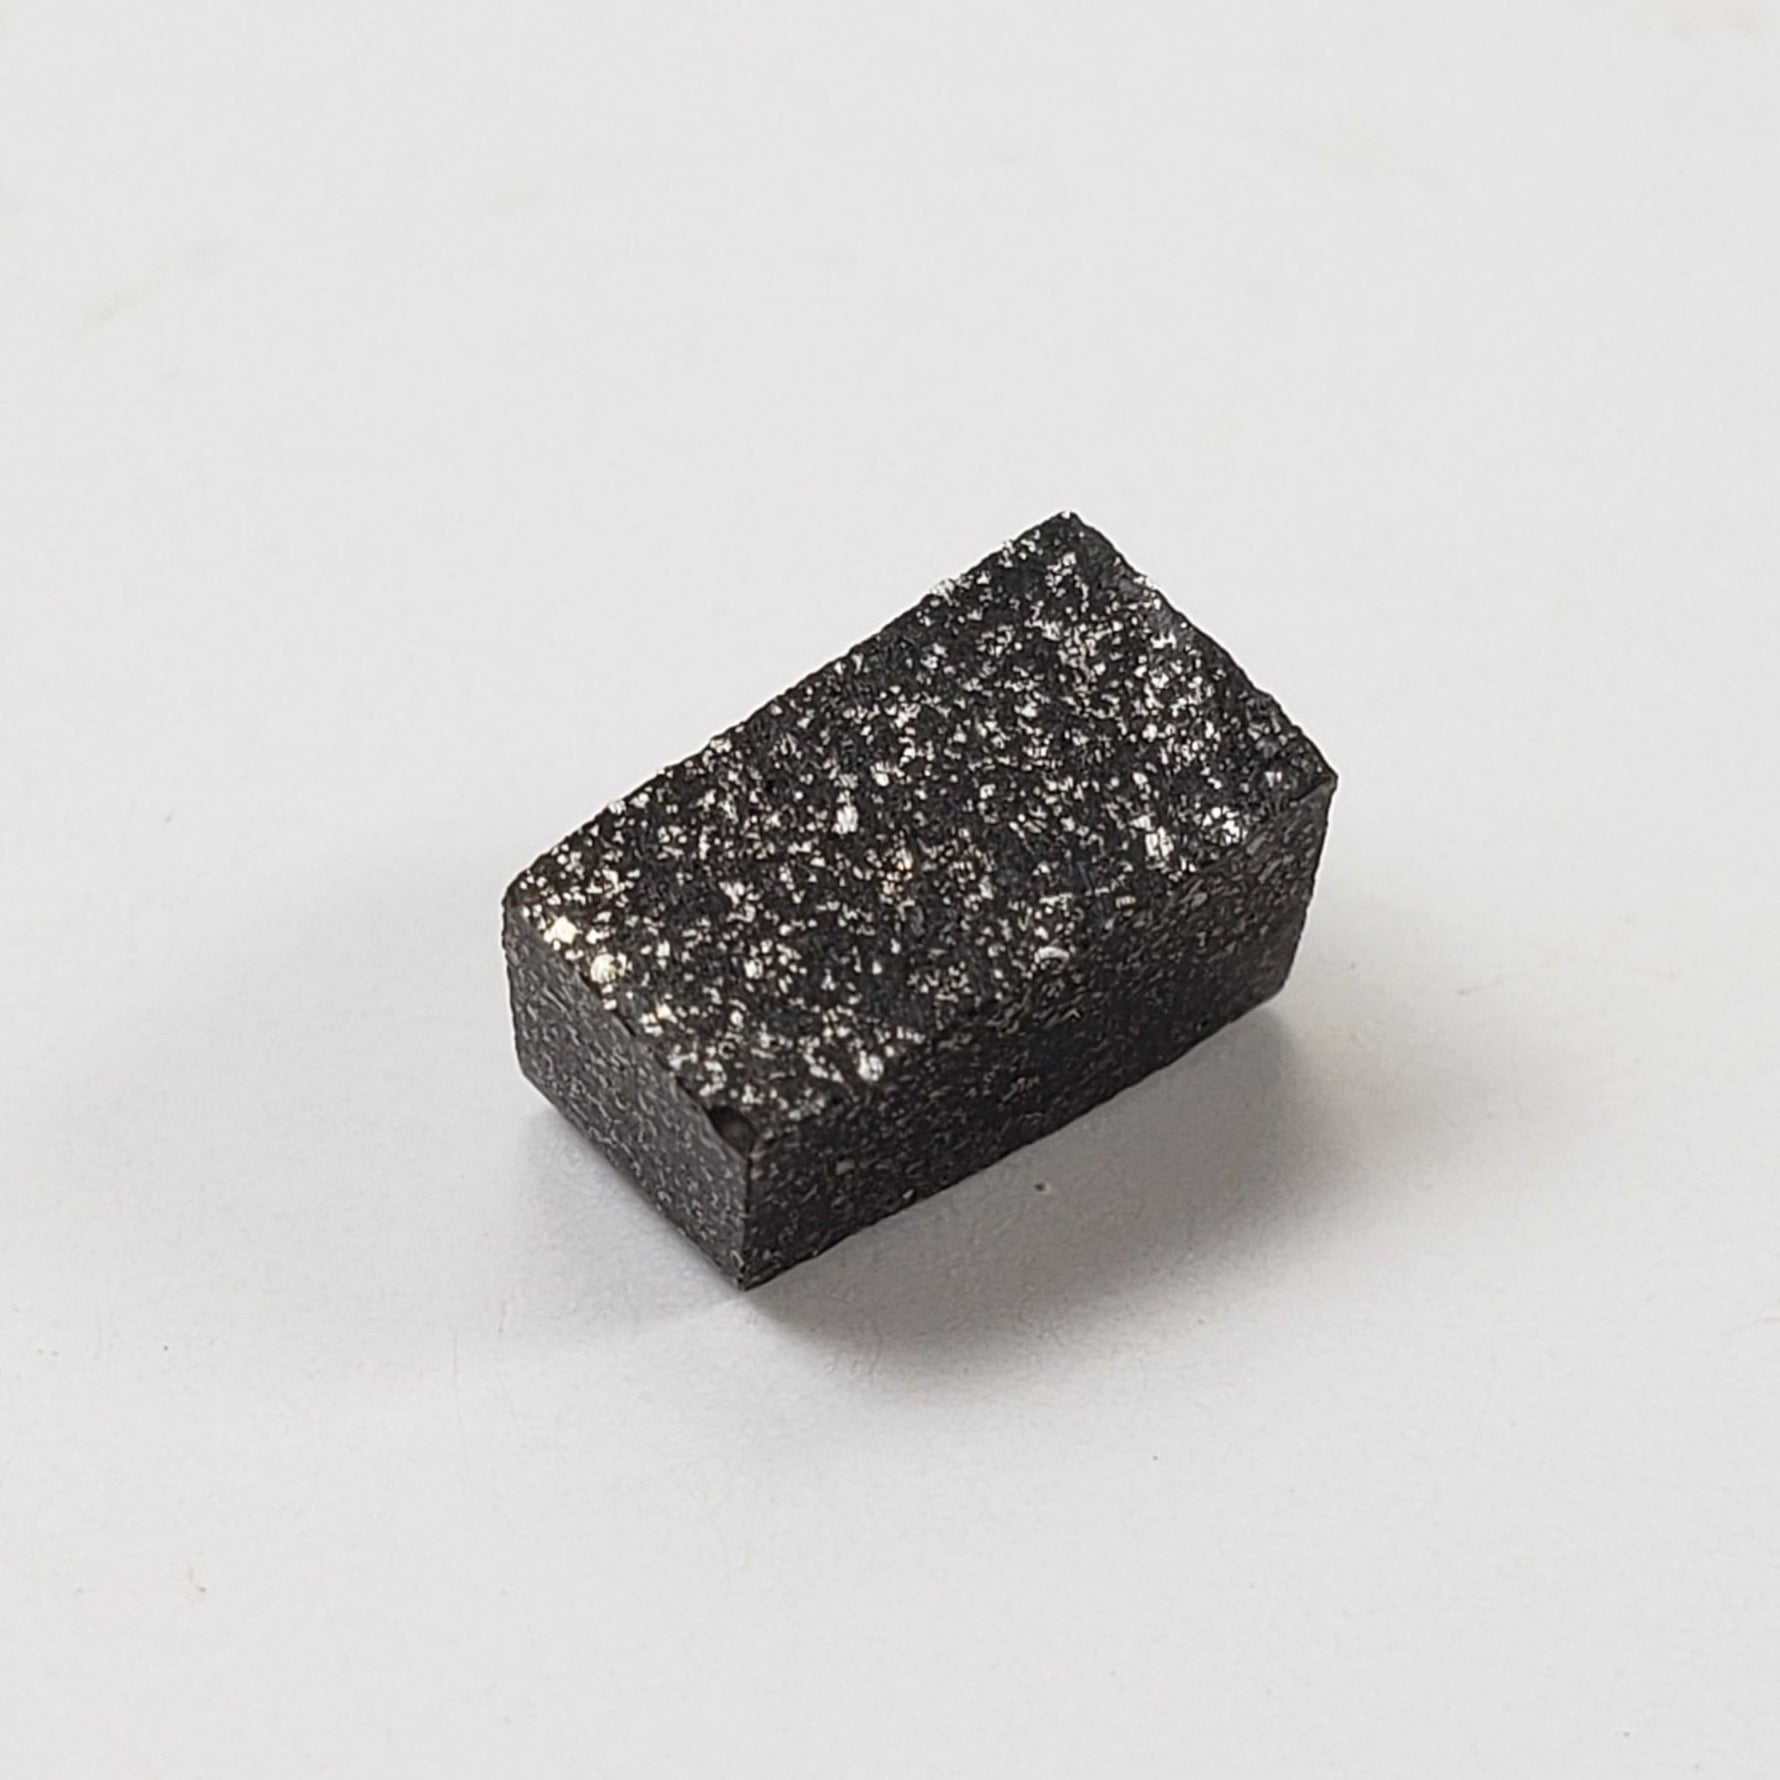 Abee Meteorite | 0.6gr | Part Slice | Rare Enstatite | EH4 Class | Observed Fall 1952 Canada | Canagem.com